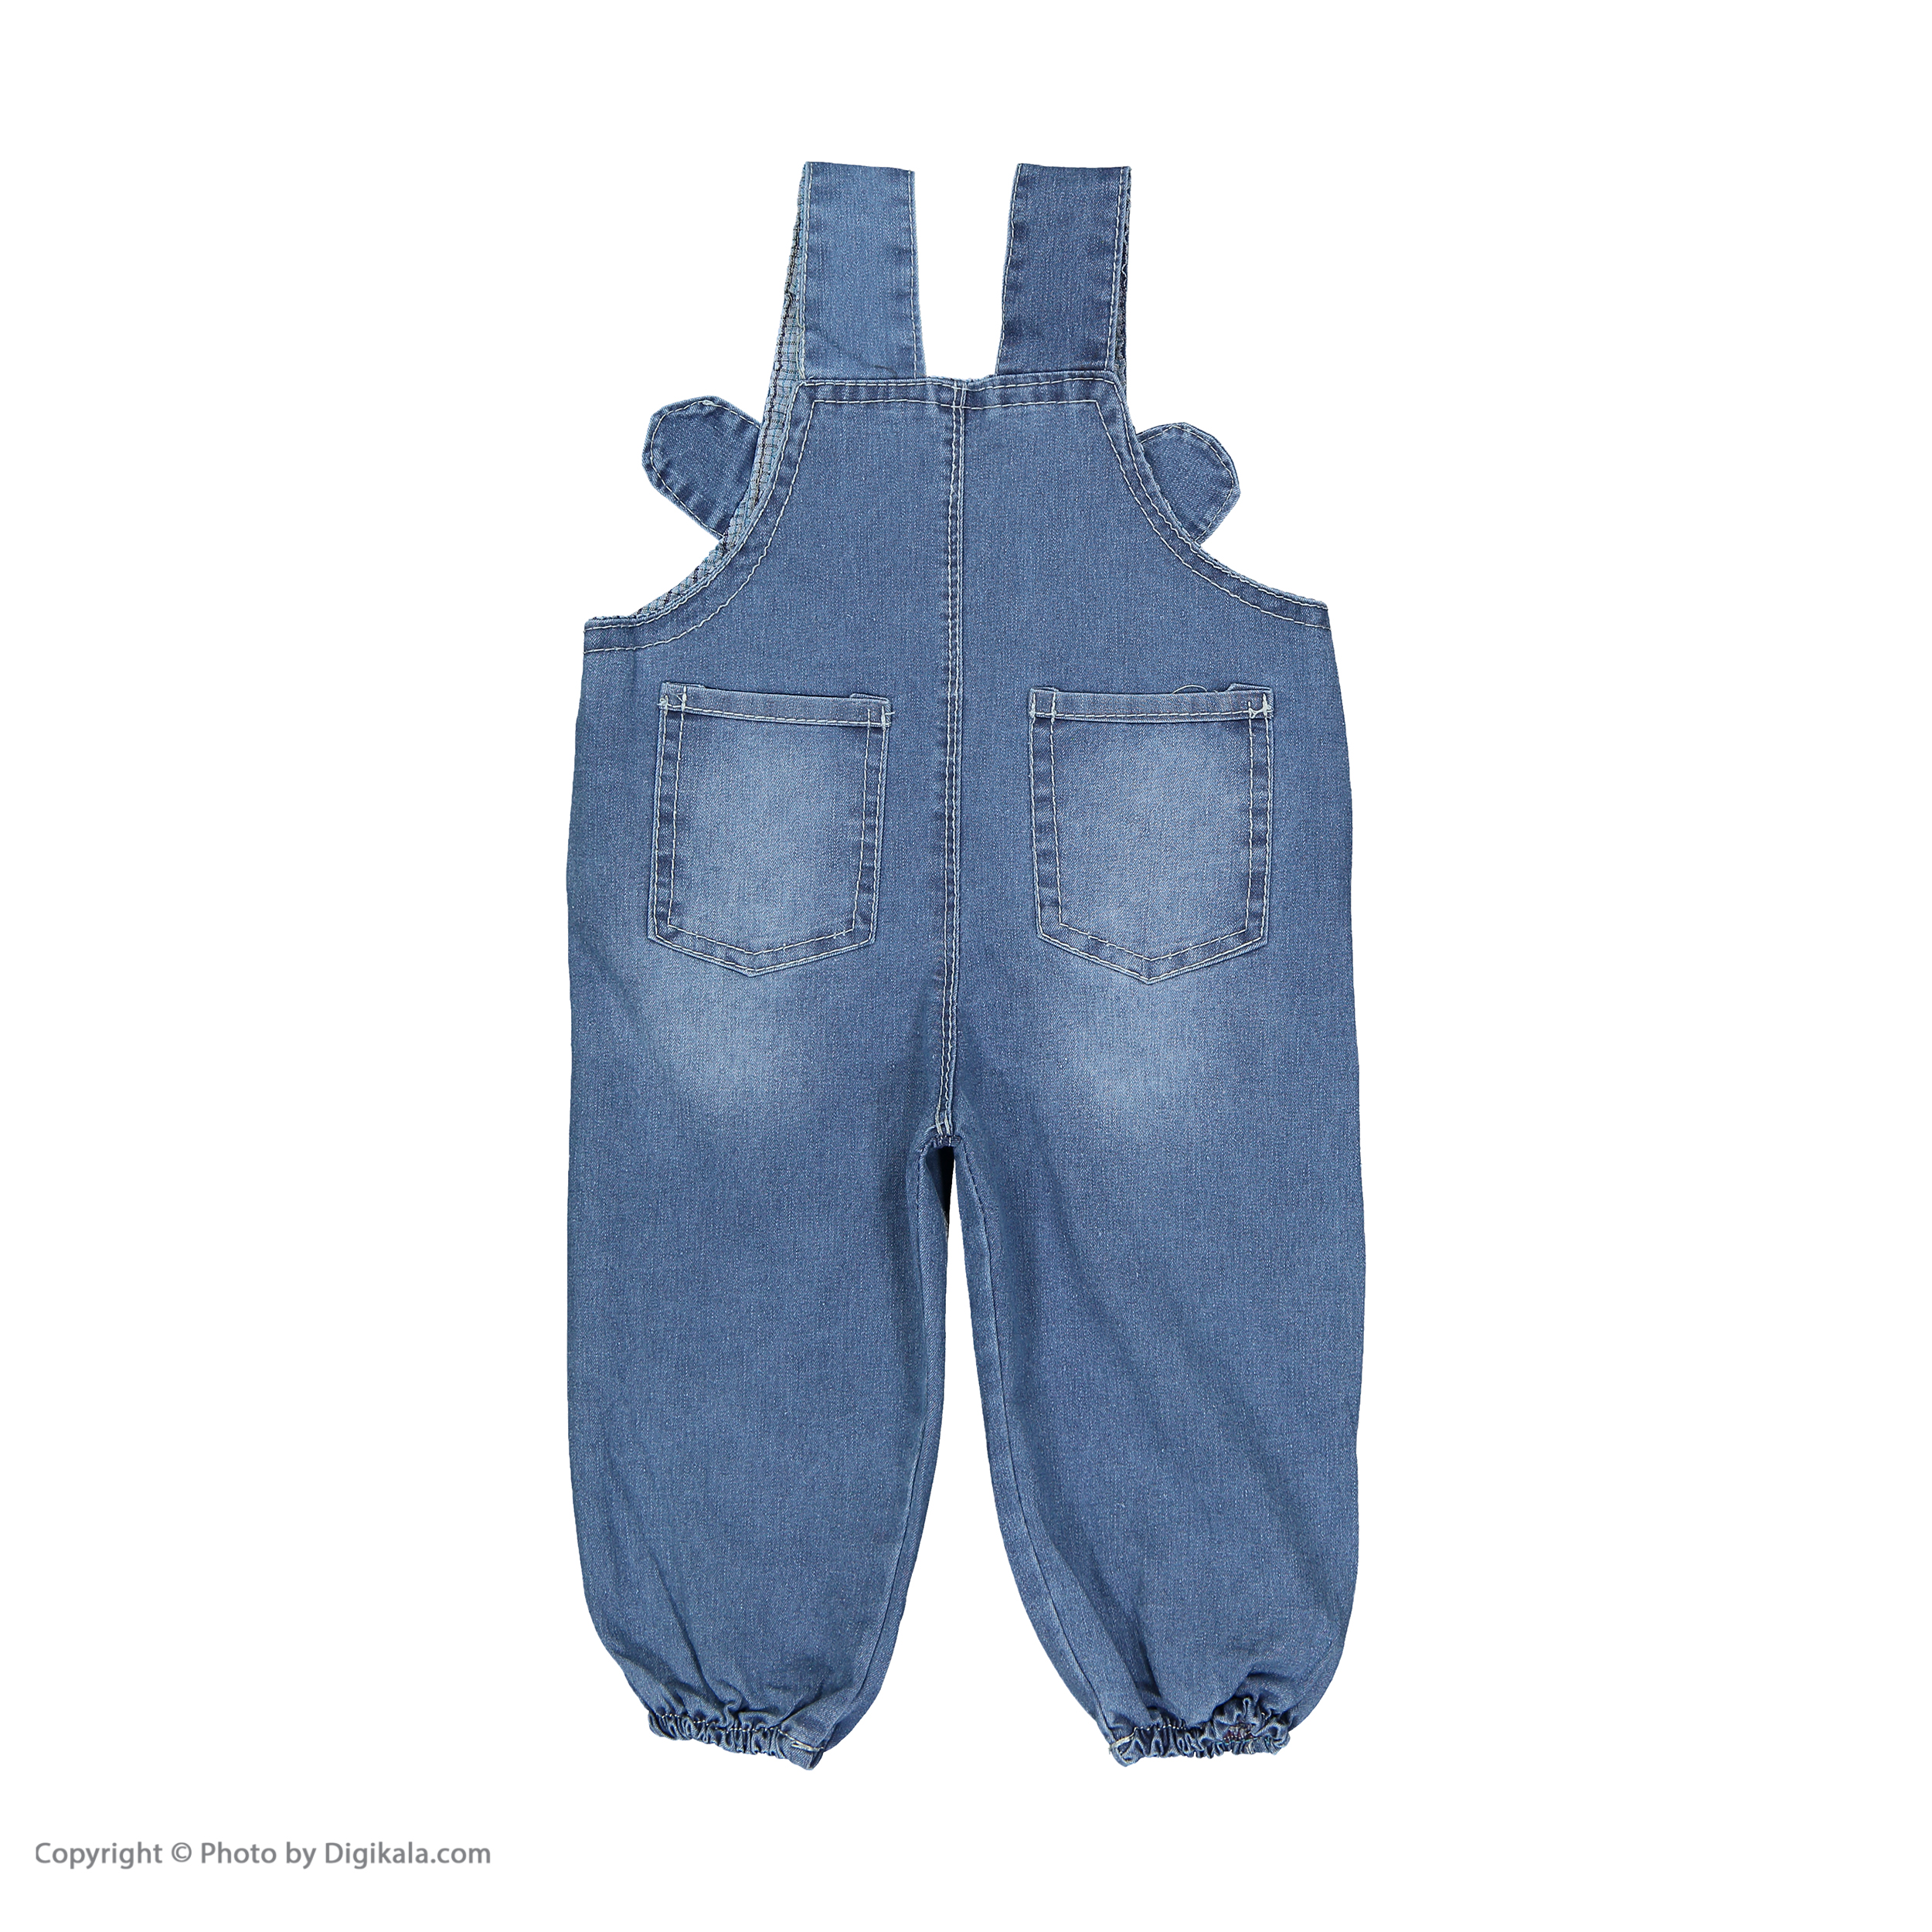 newborn baby clothes jeans romper, code 2010